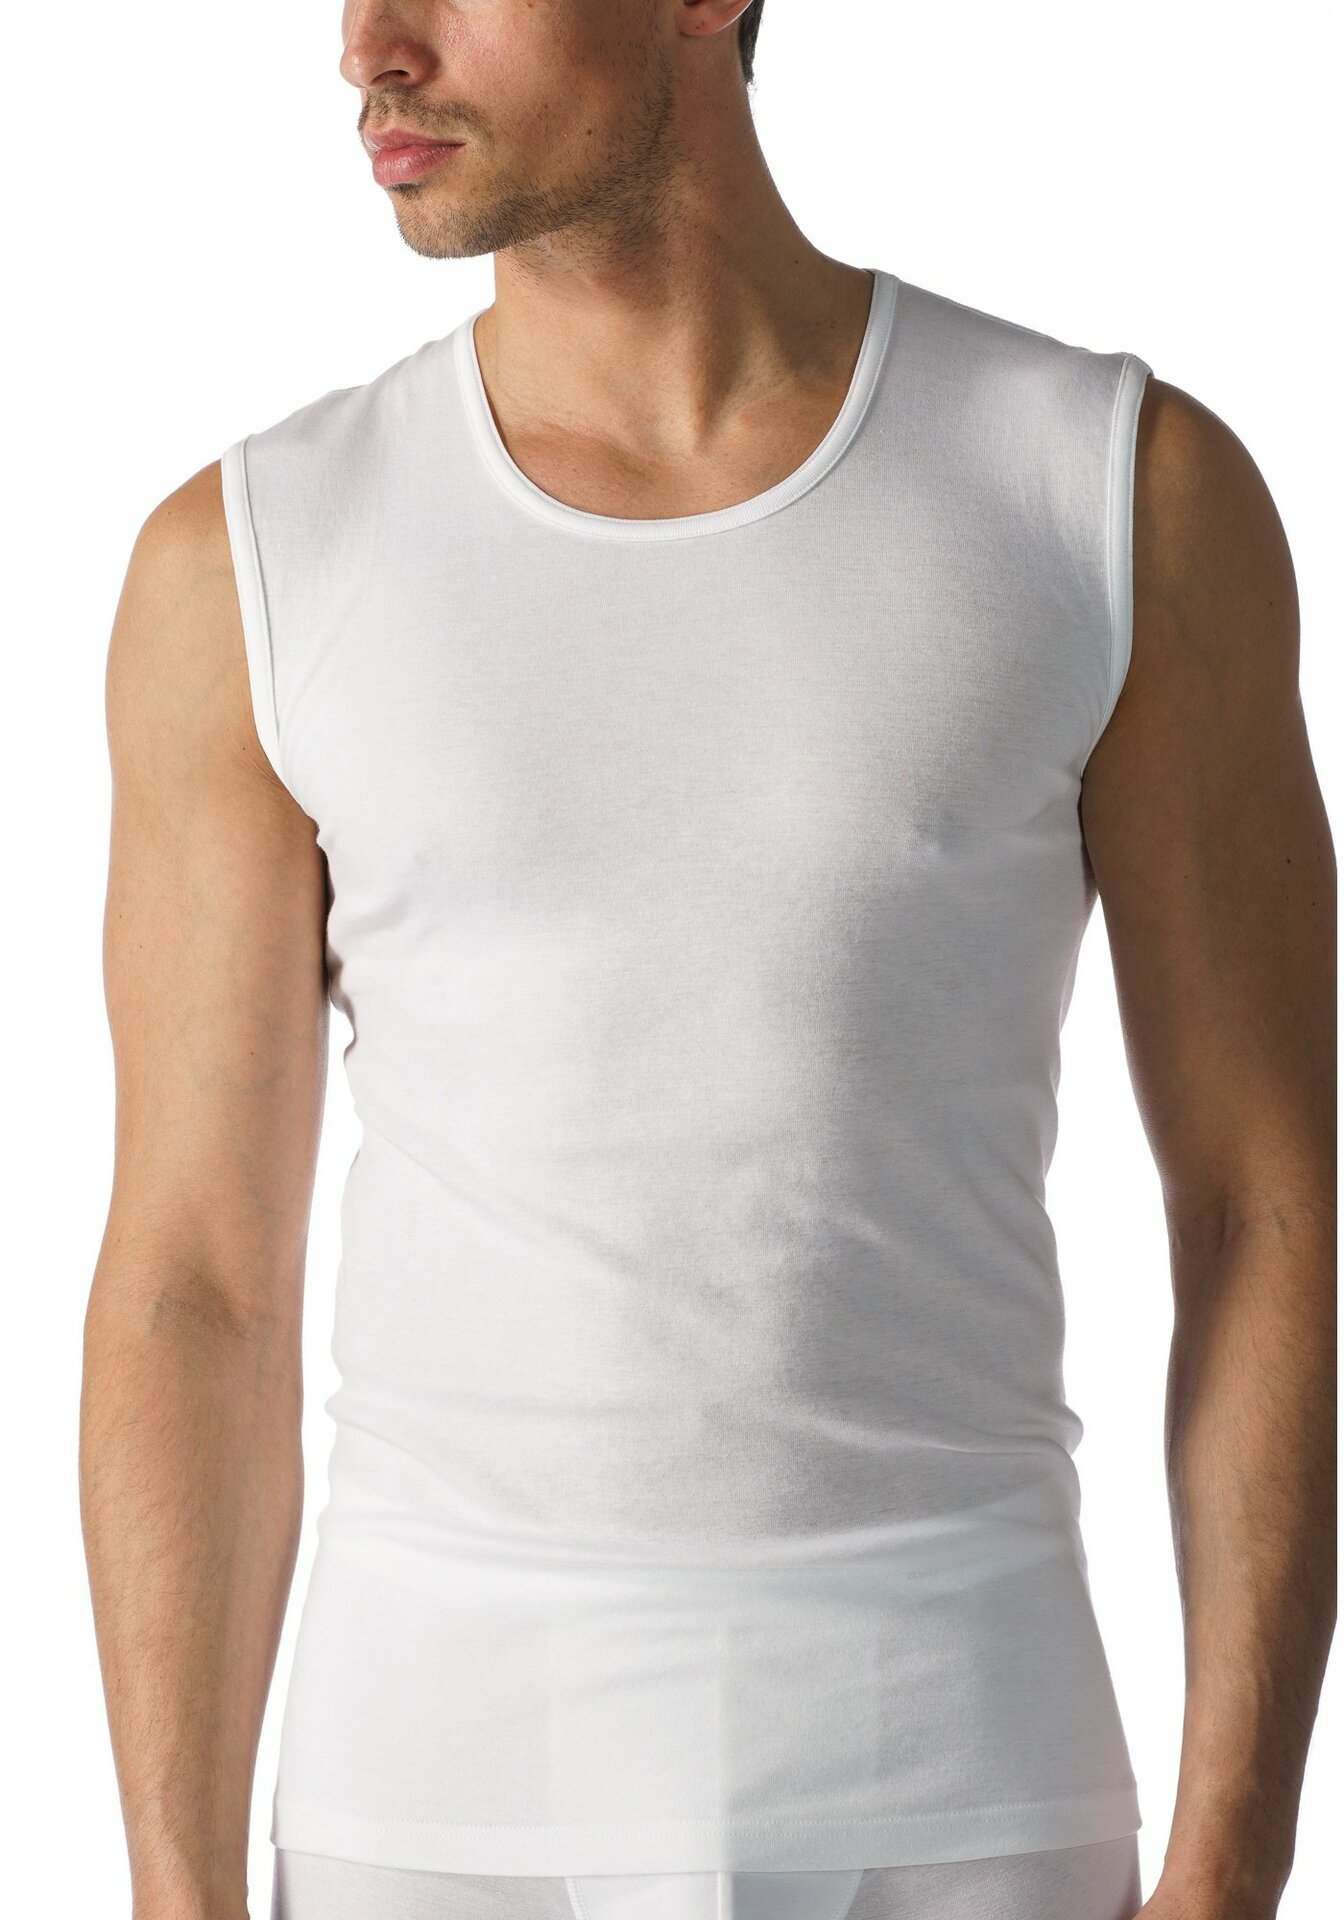 Mey Serie Casual Cotton Herren City-Shirt